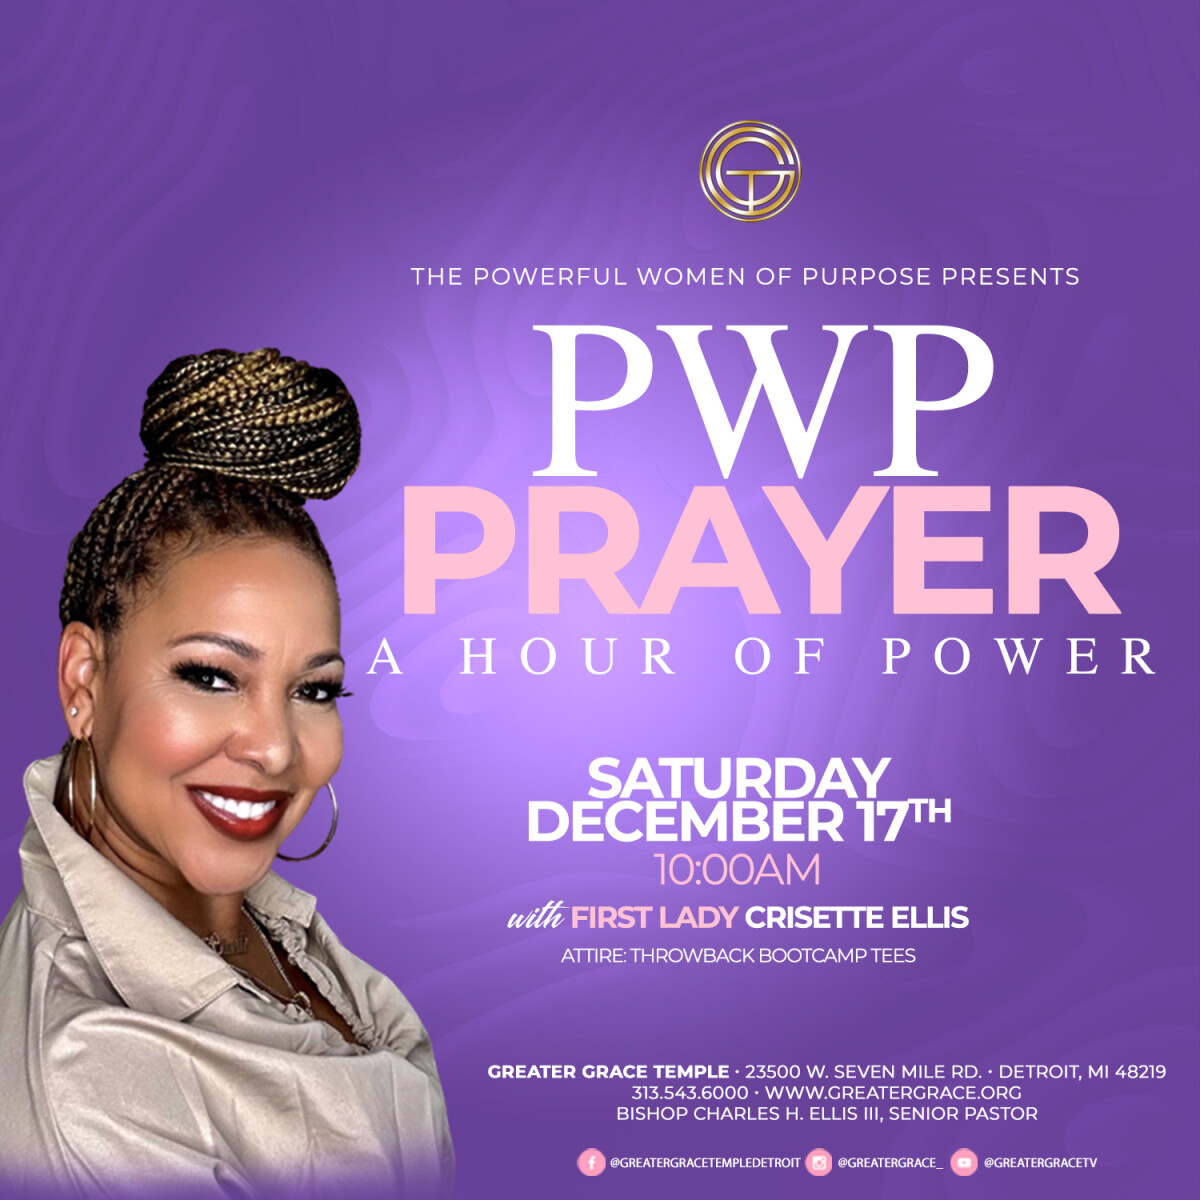 PWP Prayer - Hour of Power